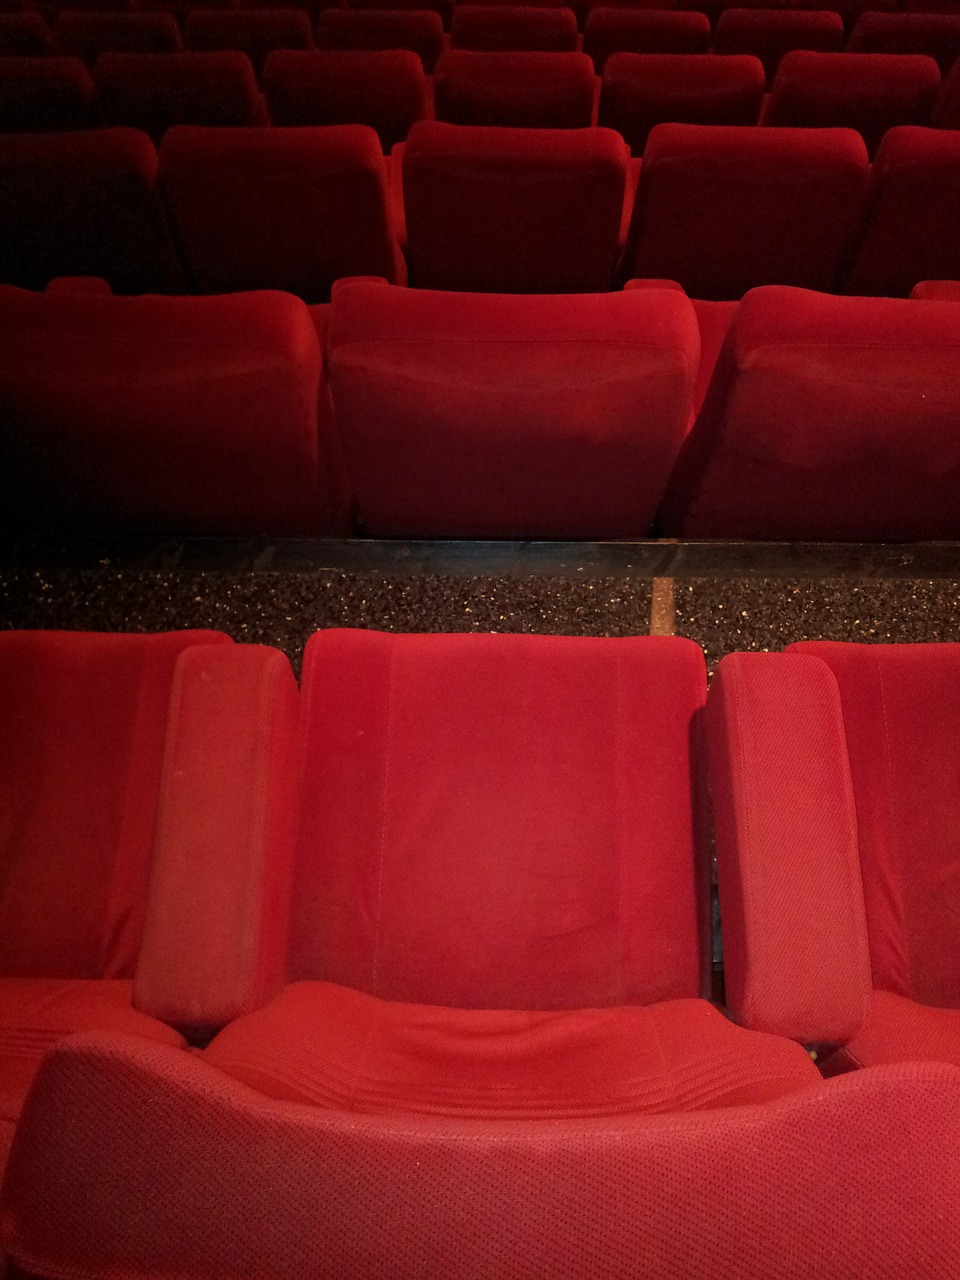 cinema chair red free photo